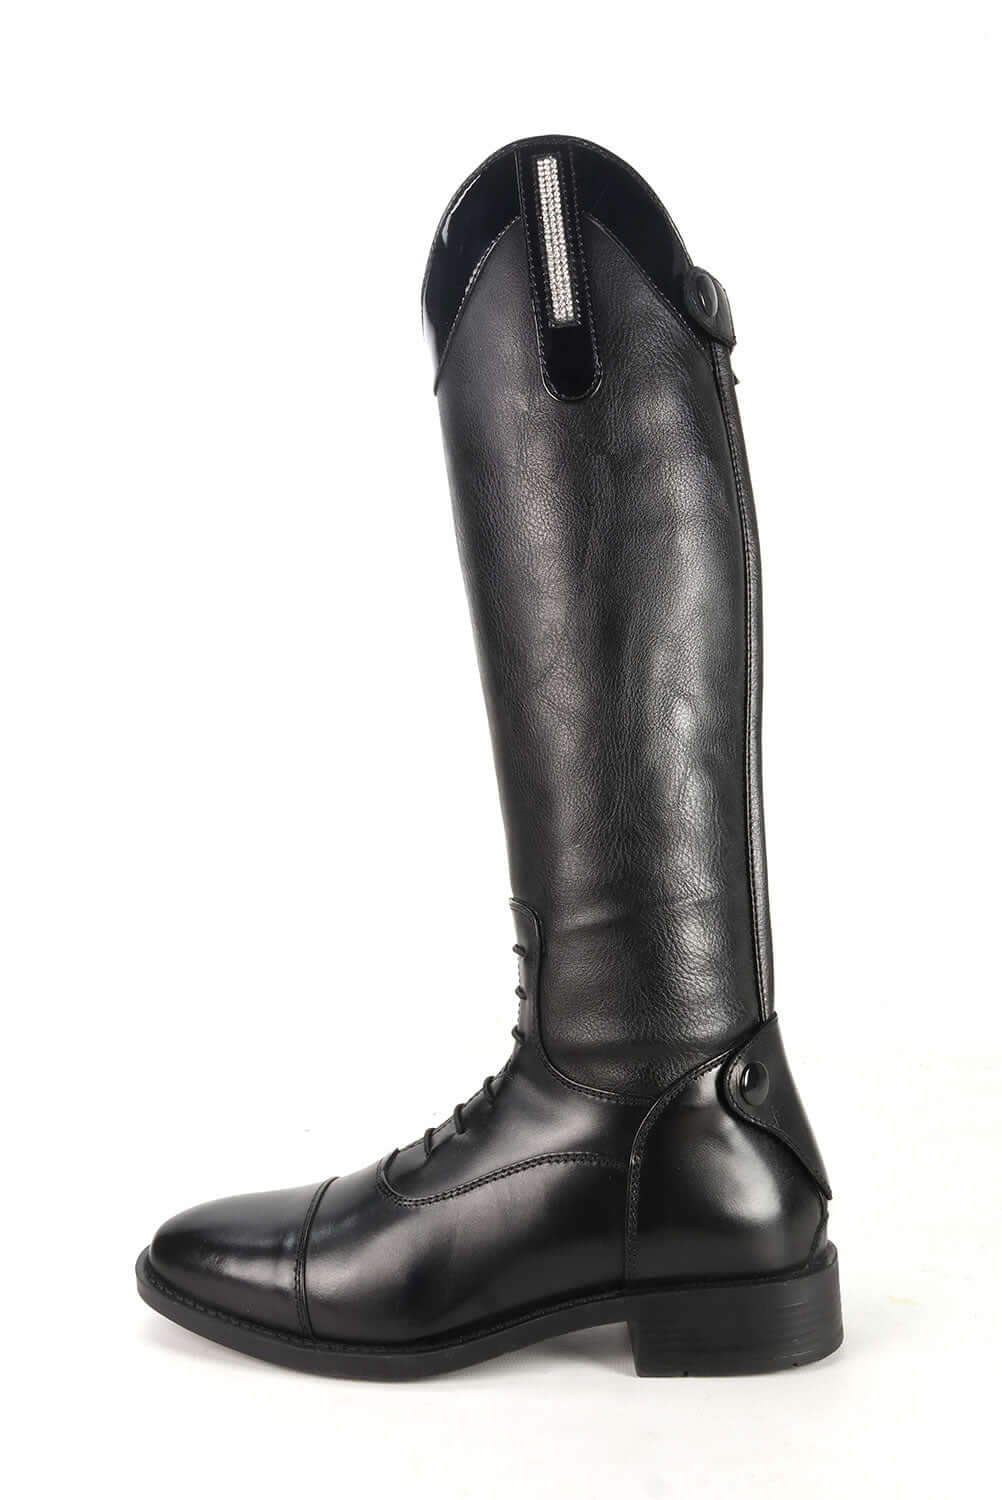 Brogini Como Piccino Yr Boots Childs Black Patent 